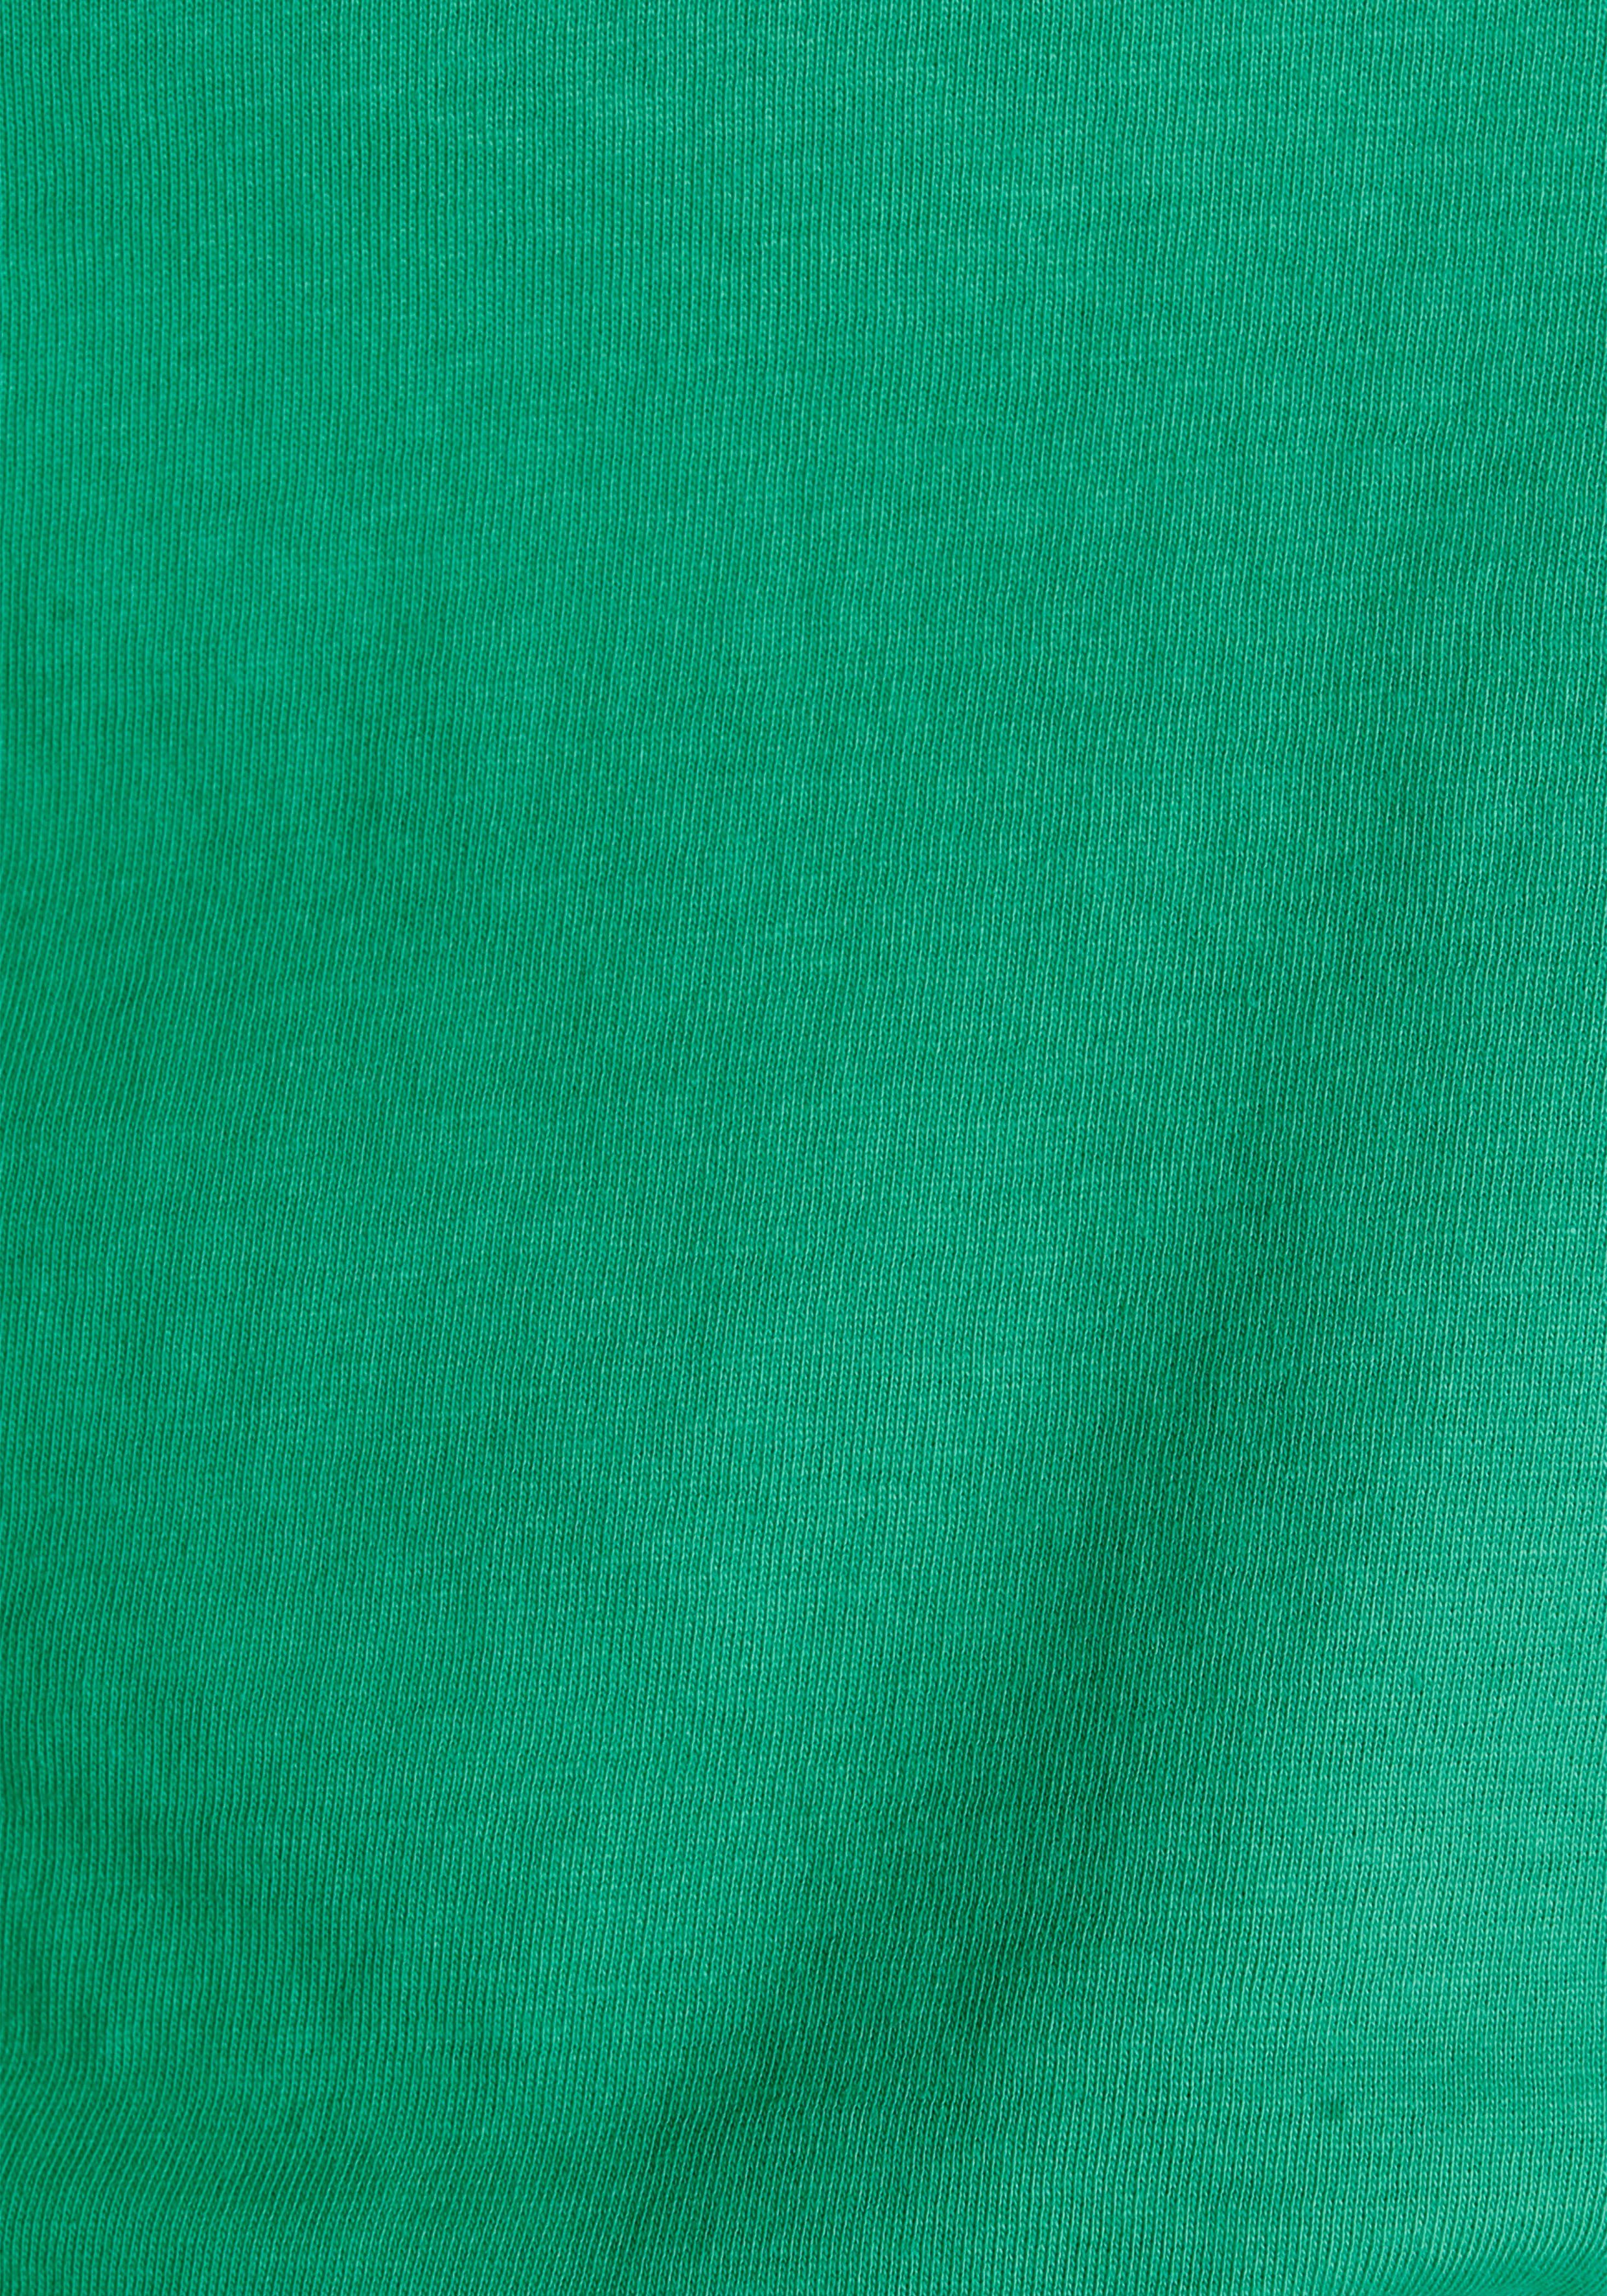 NEUE grün trendigen AJC KOLLEKTION im - Oversized-Look T-Shirt